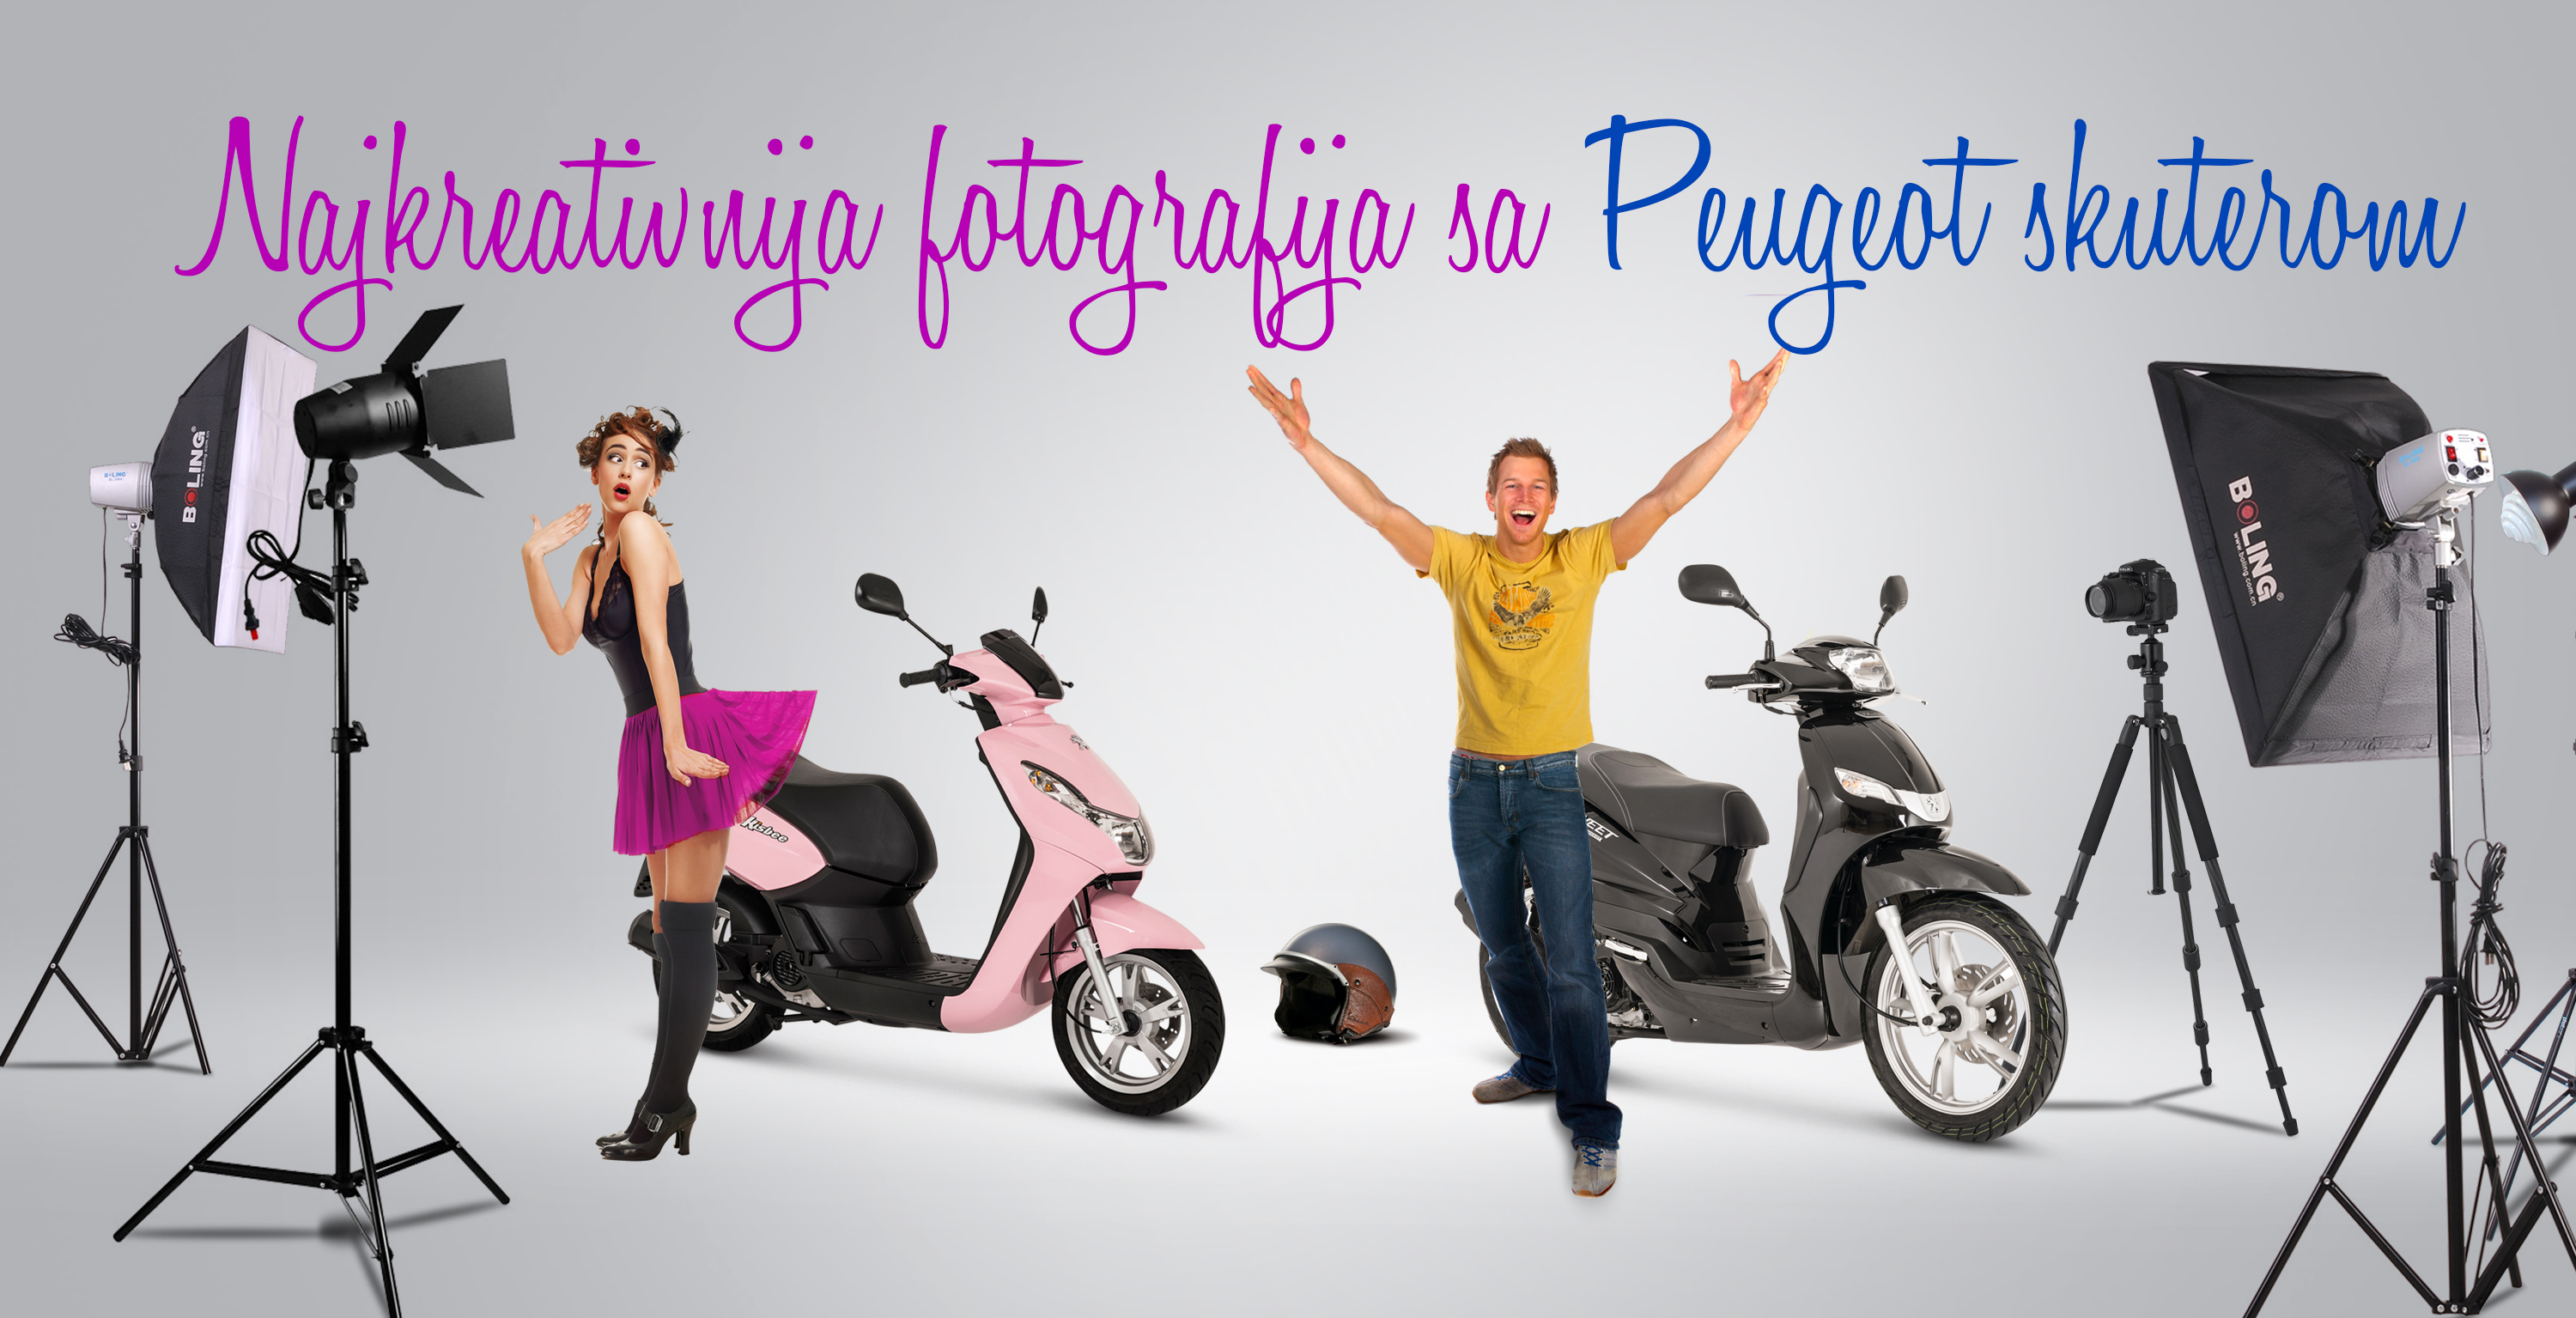 Nagradni foto-konkurs “Najkreativnija fotografija sa Peugeot skuterom”